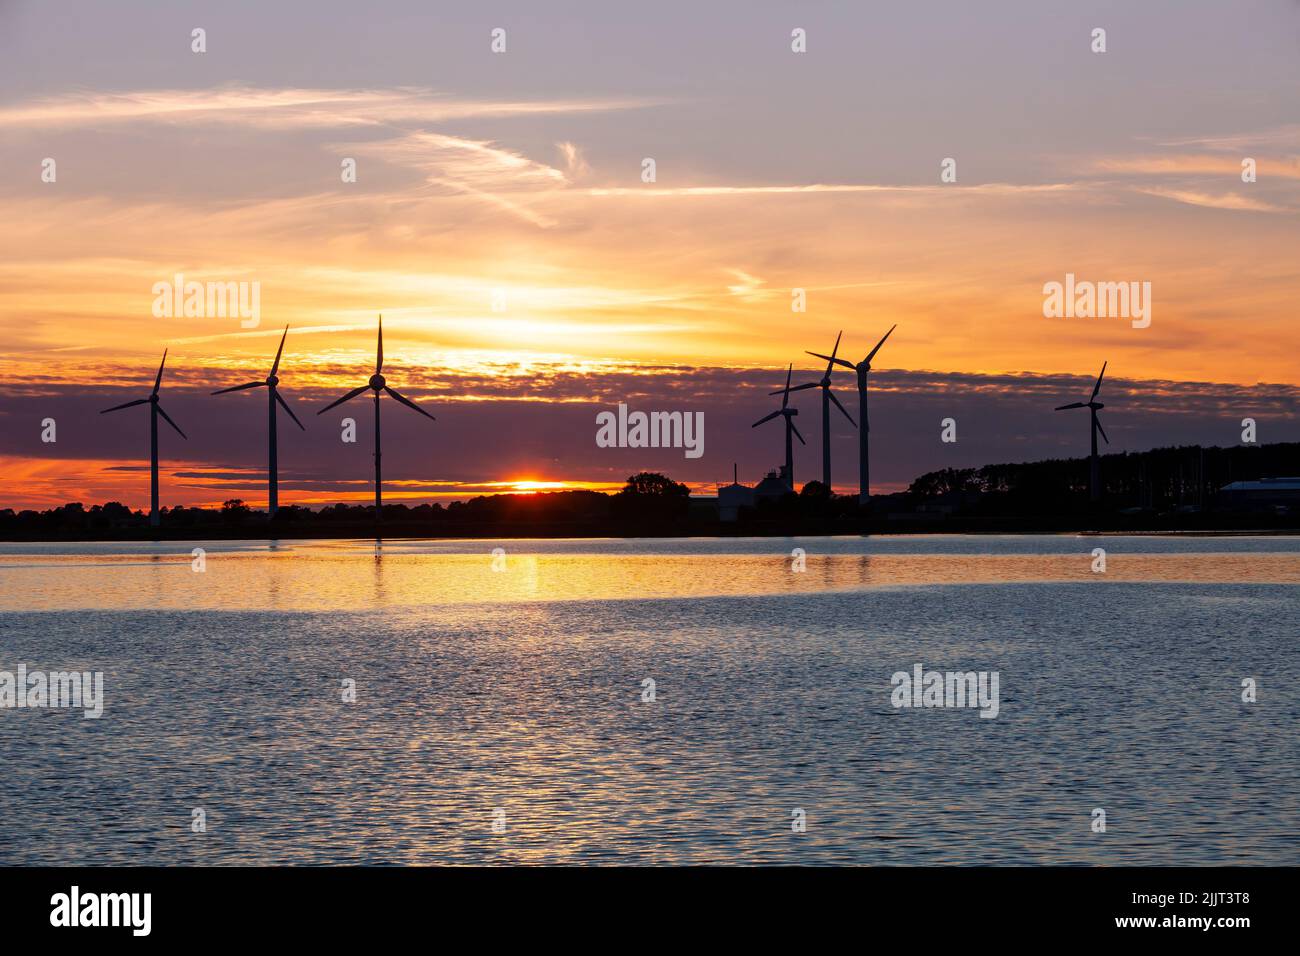 Windpower generators, Fehmarn Island, Baltic Sea, Schleswig-Holstein, Germany, Europe Stock Photo